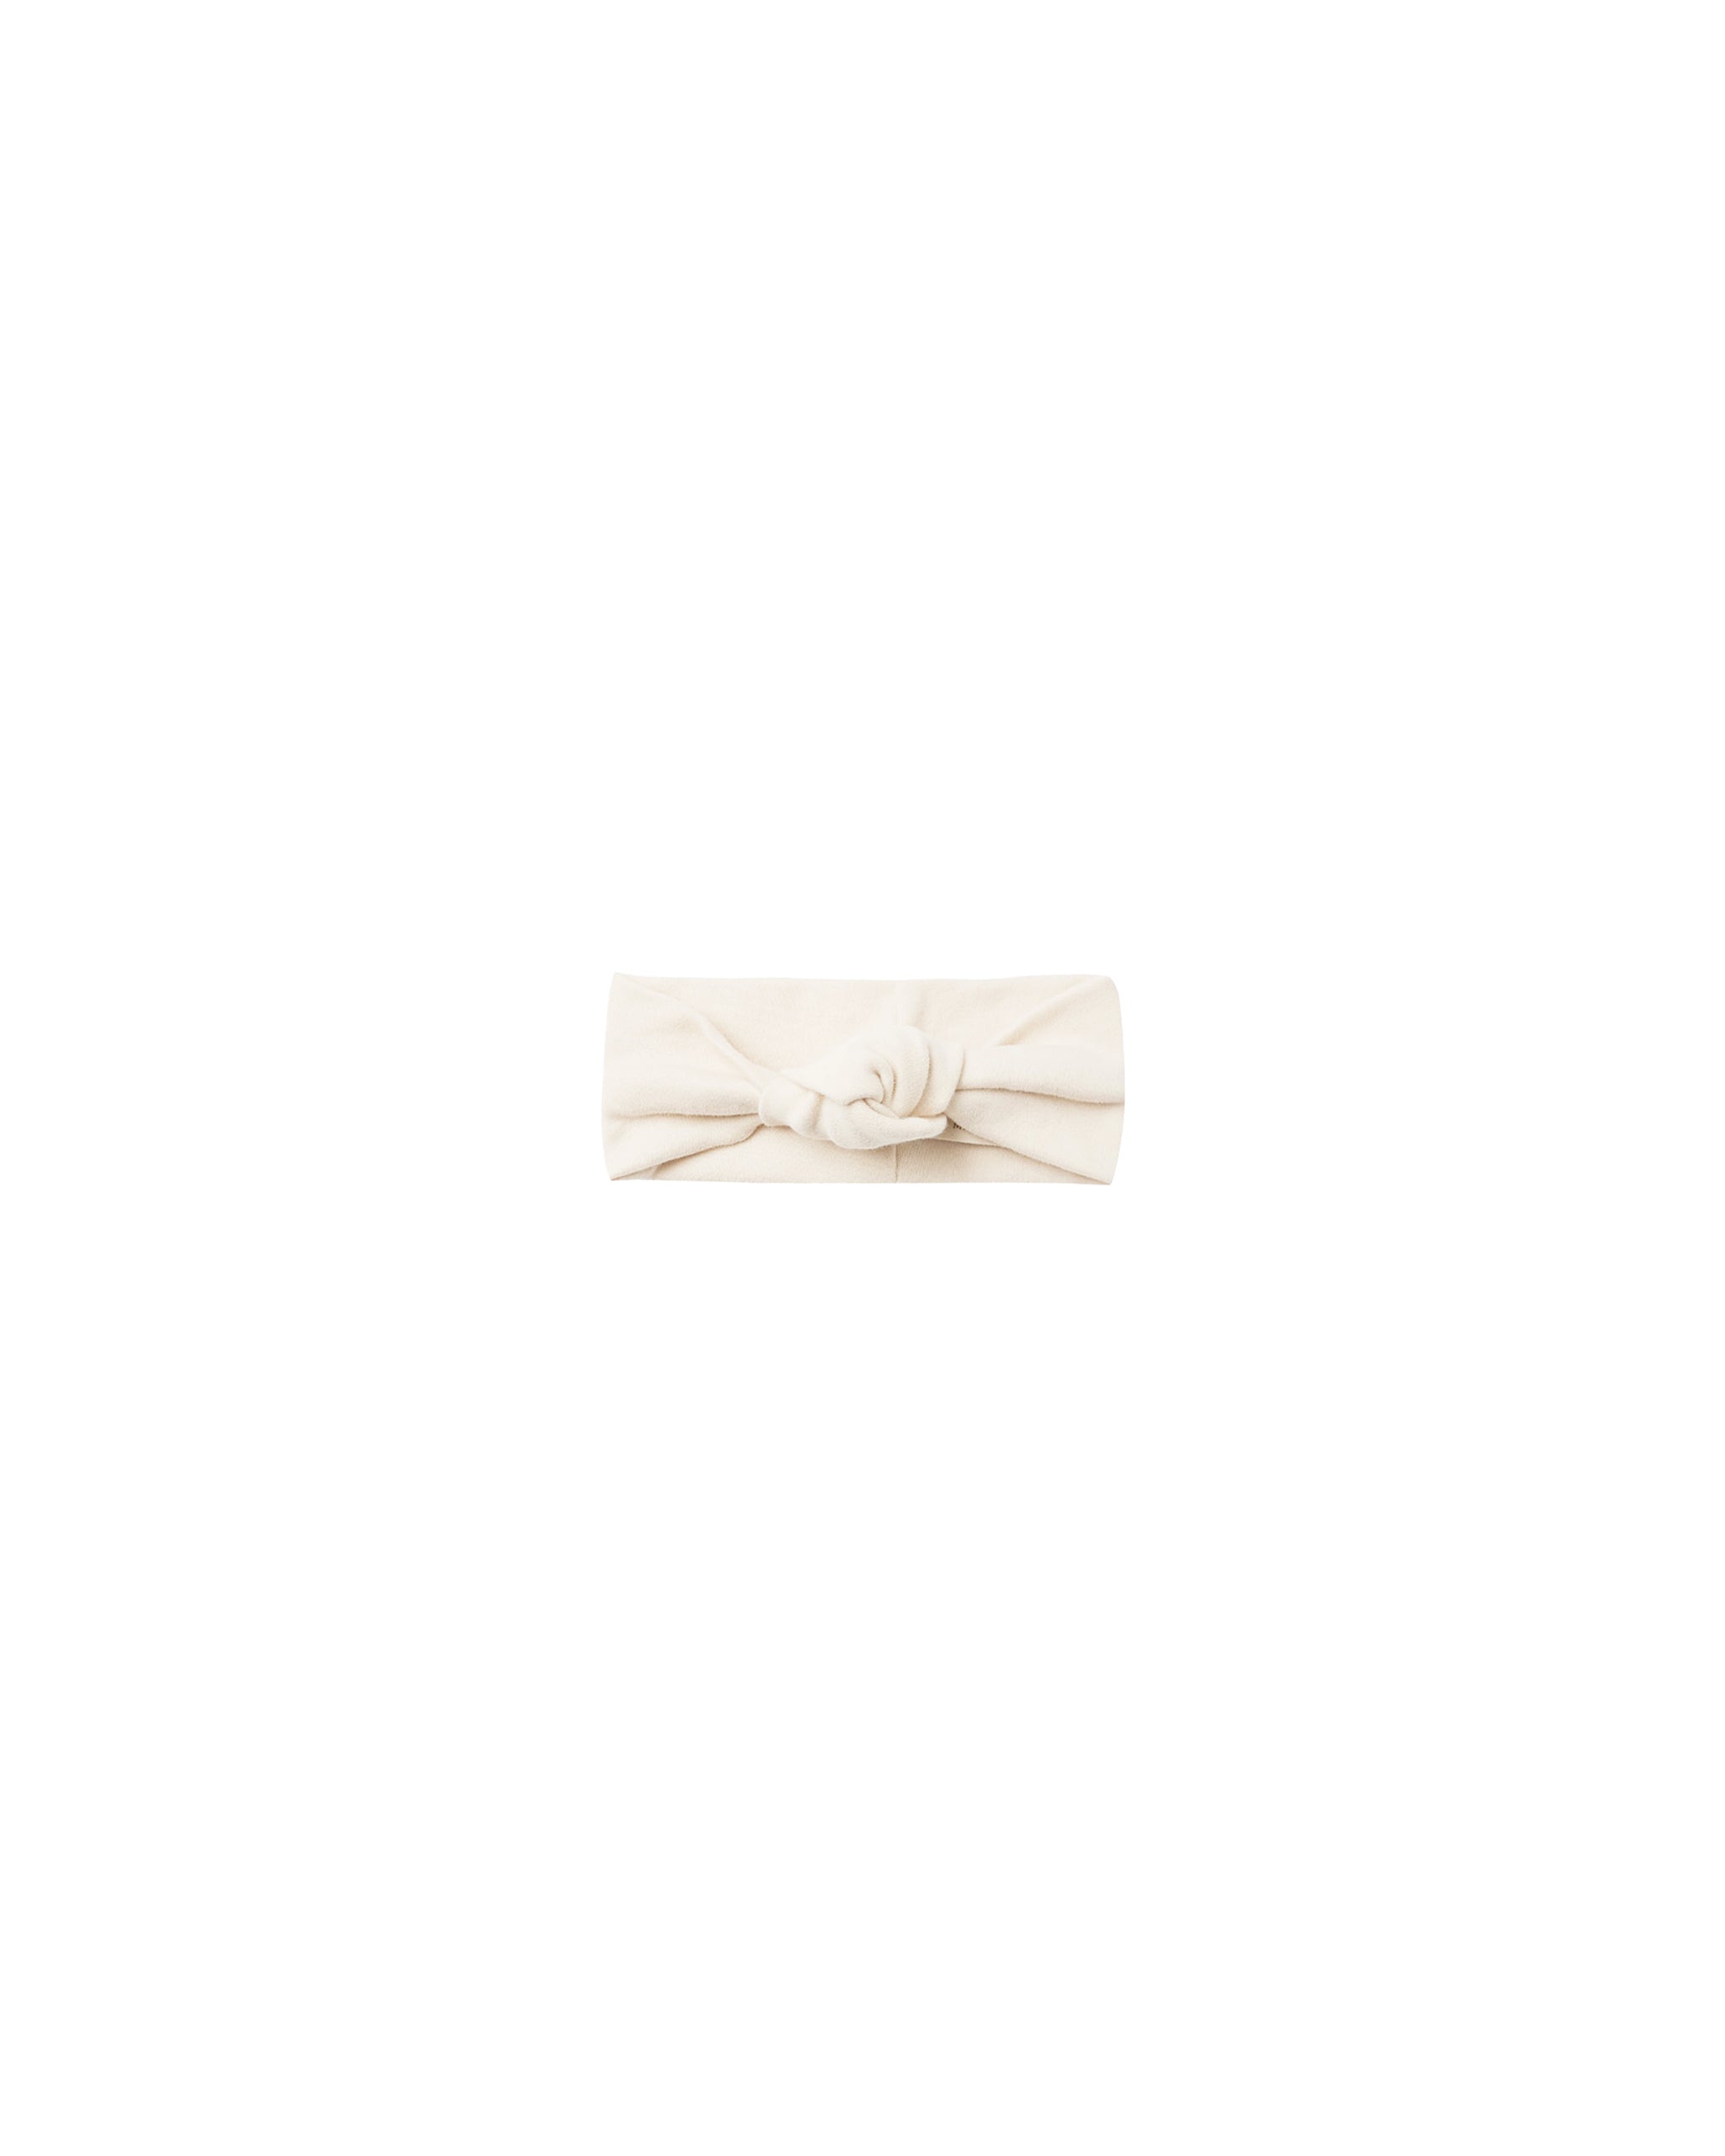 Knotted Headband - Ivory - Twinkle Twinkle Little One